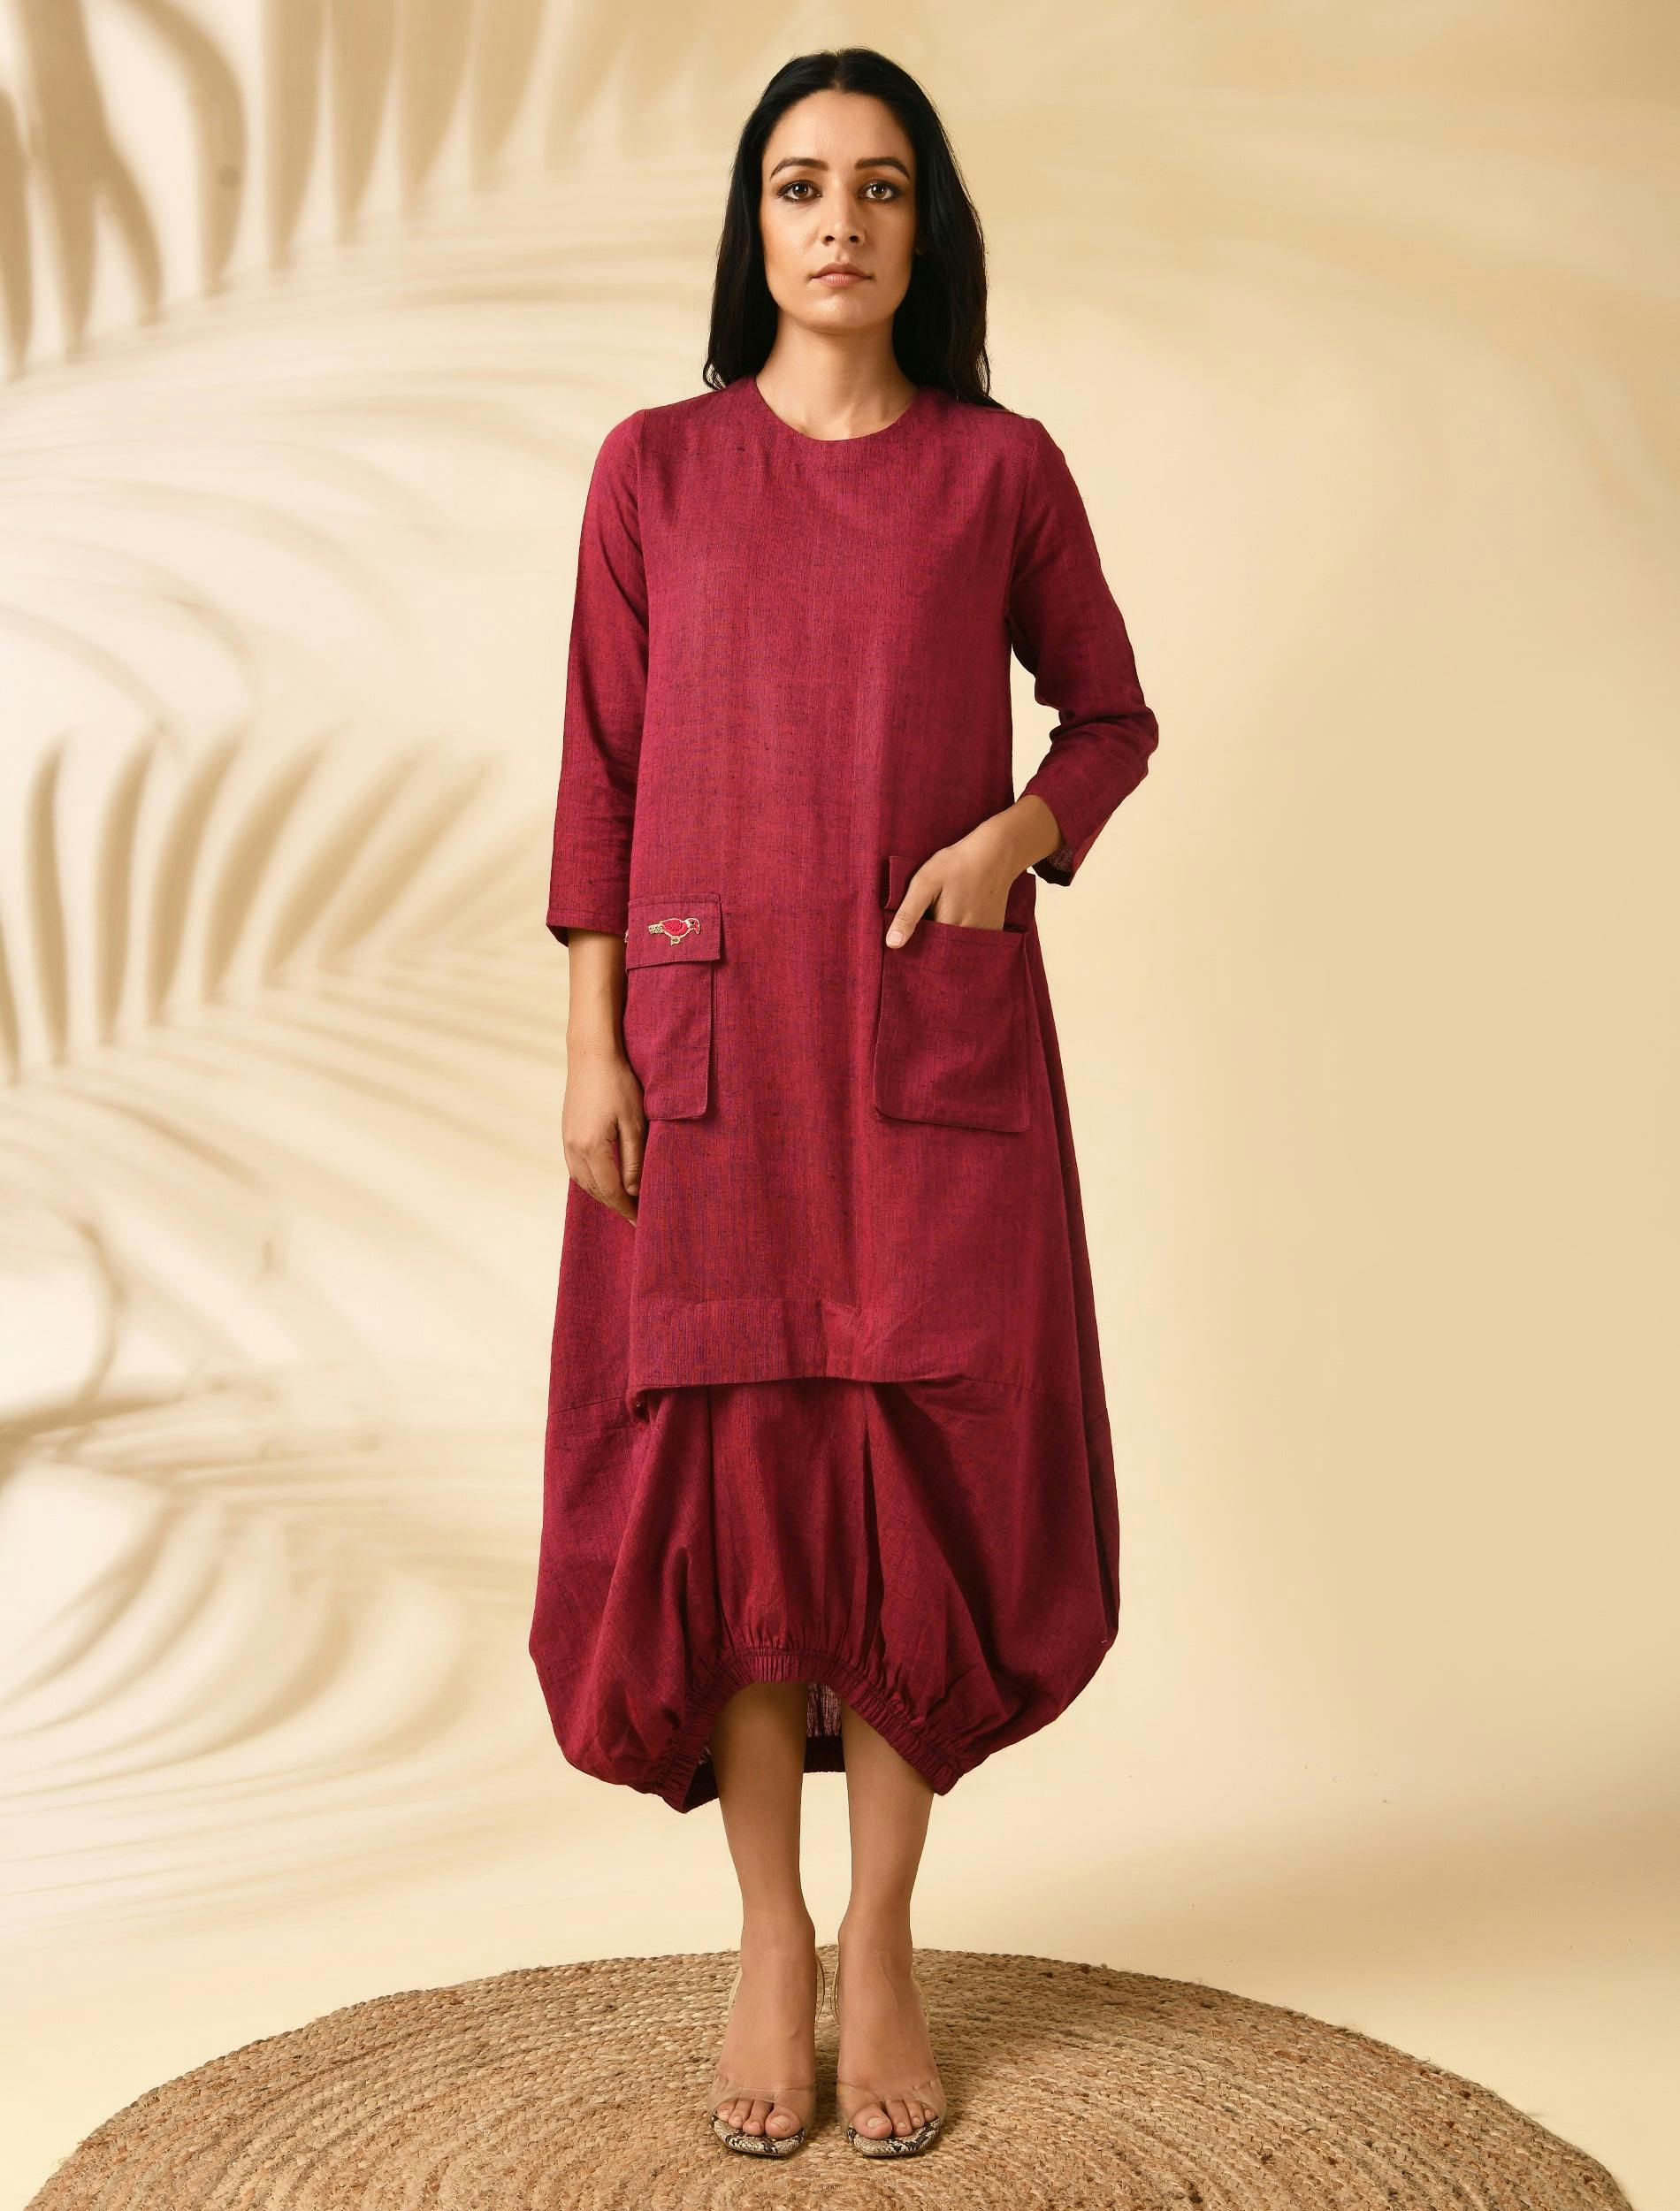 WINE UMBRELLA DRESS, a product by MARKKAH STUDIO